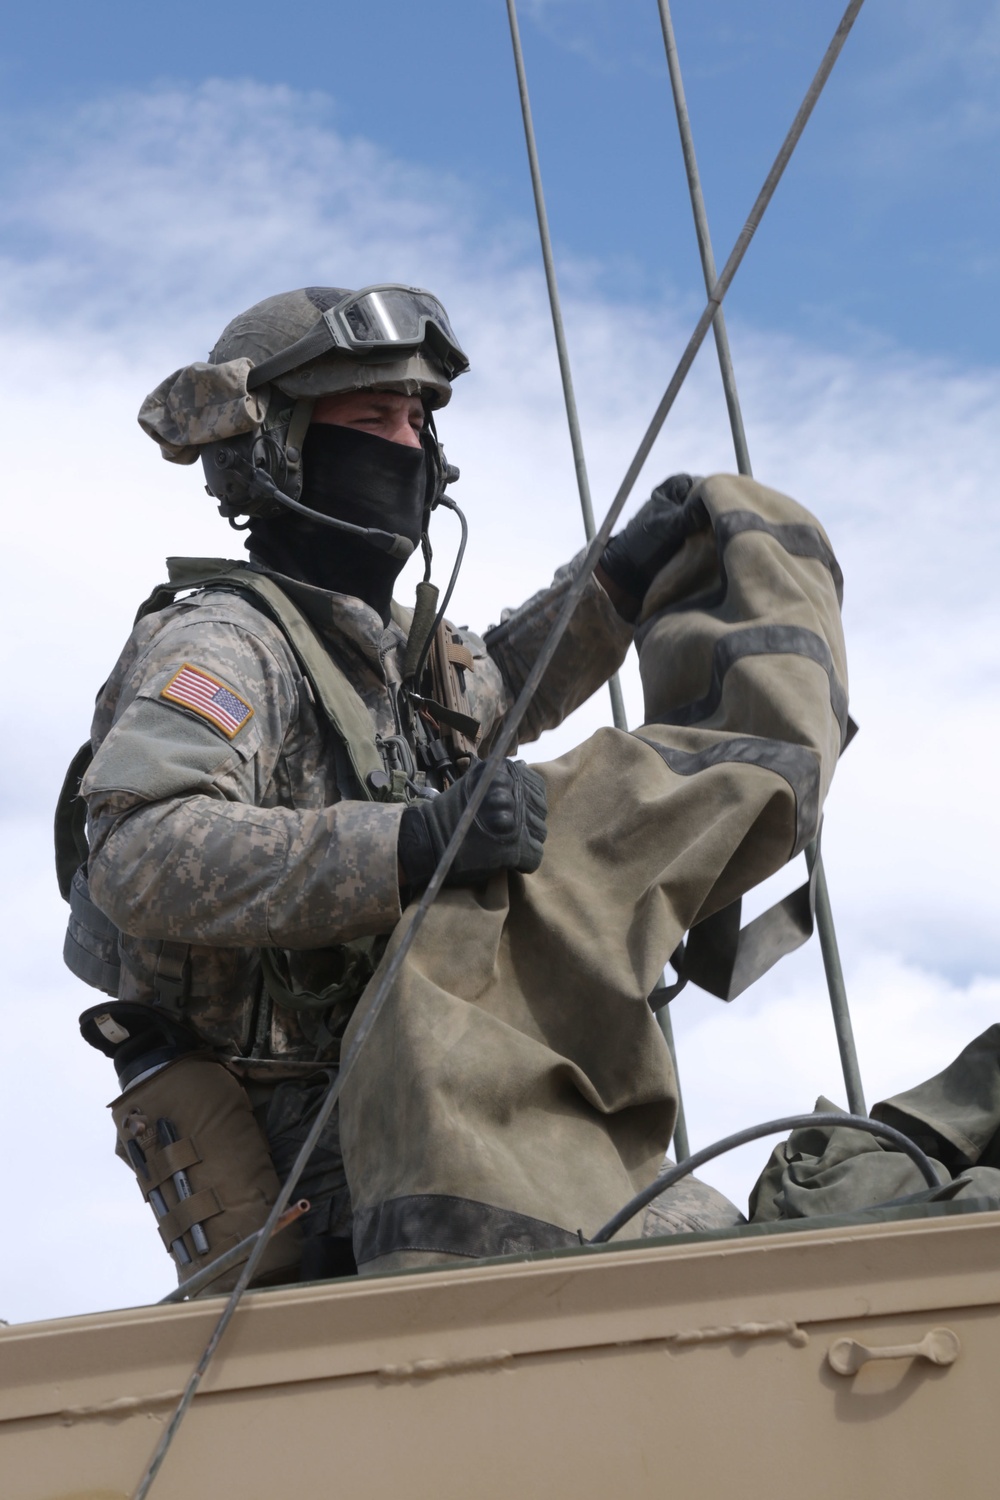 U.S. Army Soldier Sets Up Radio